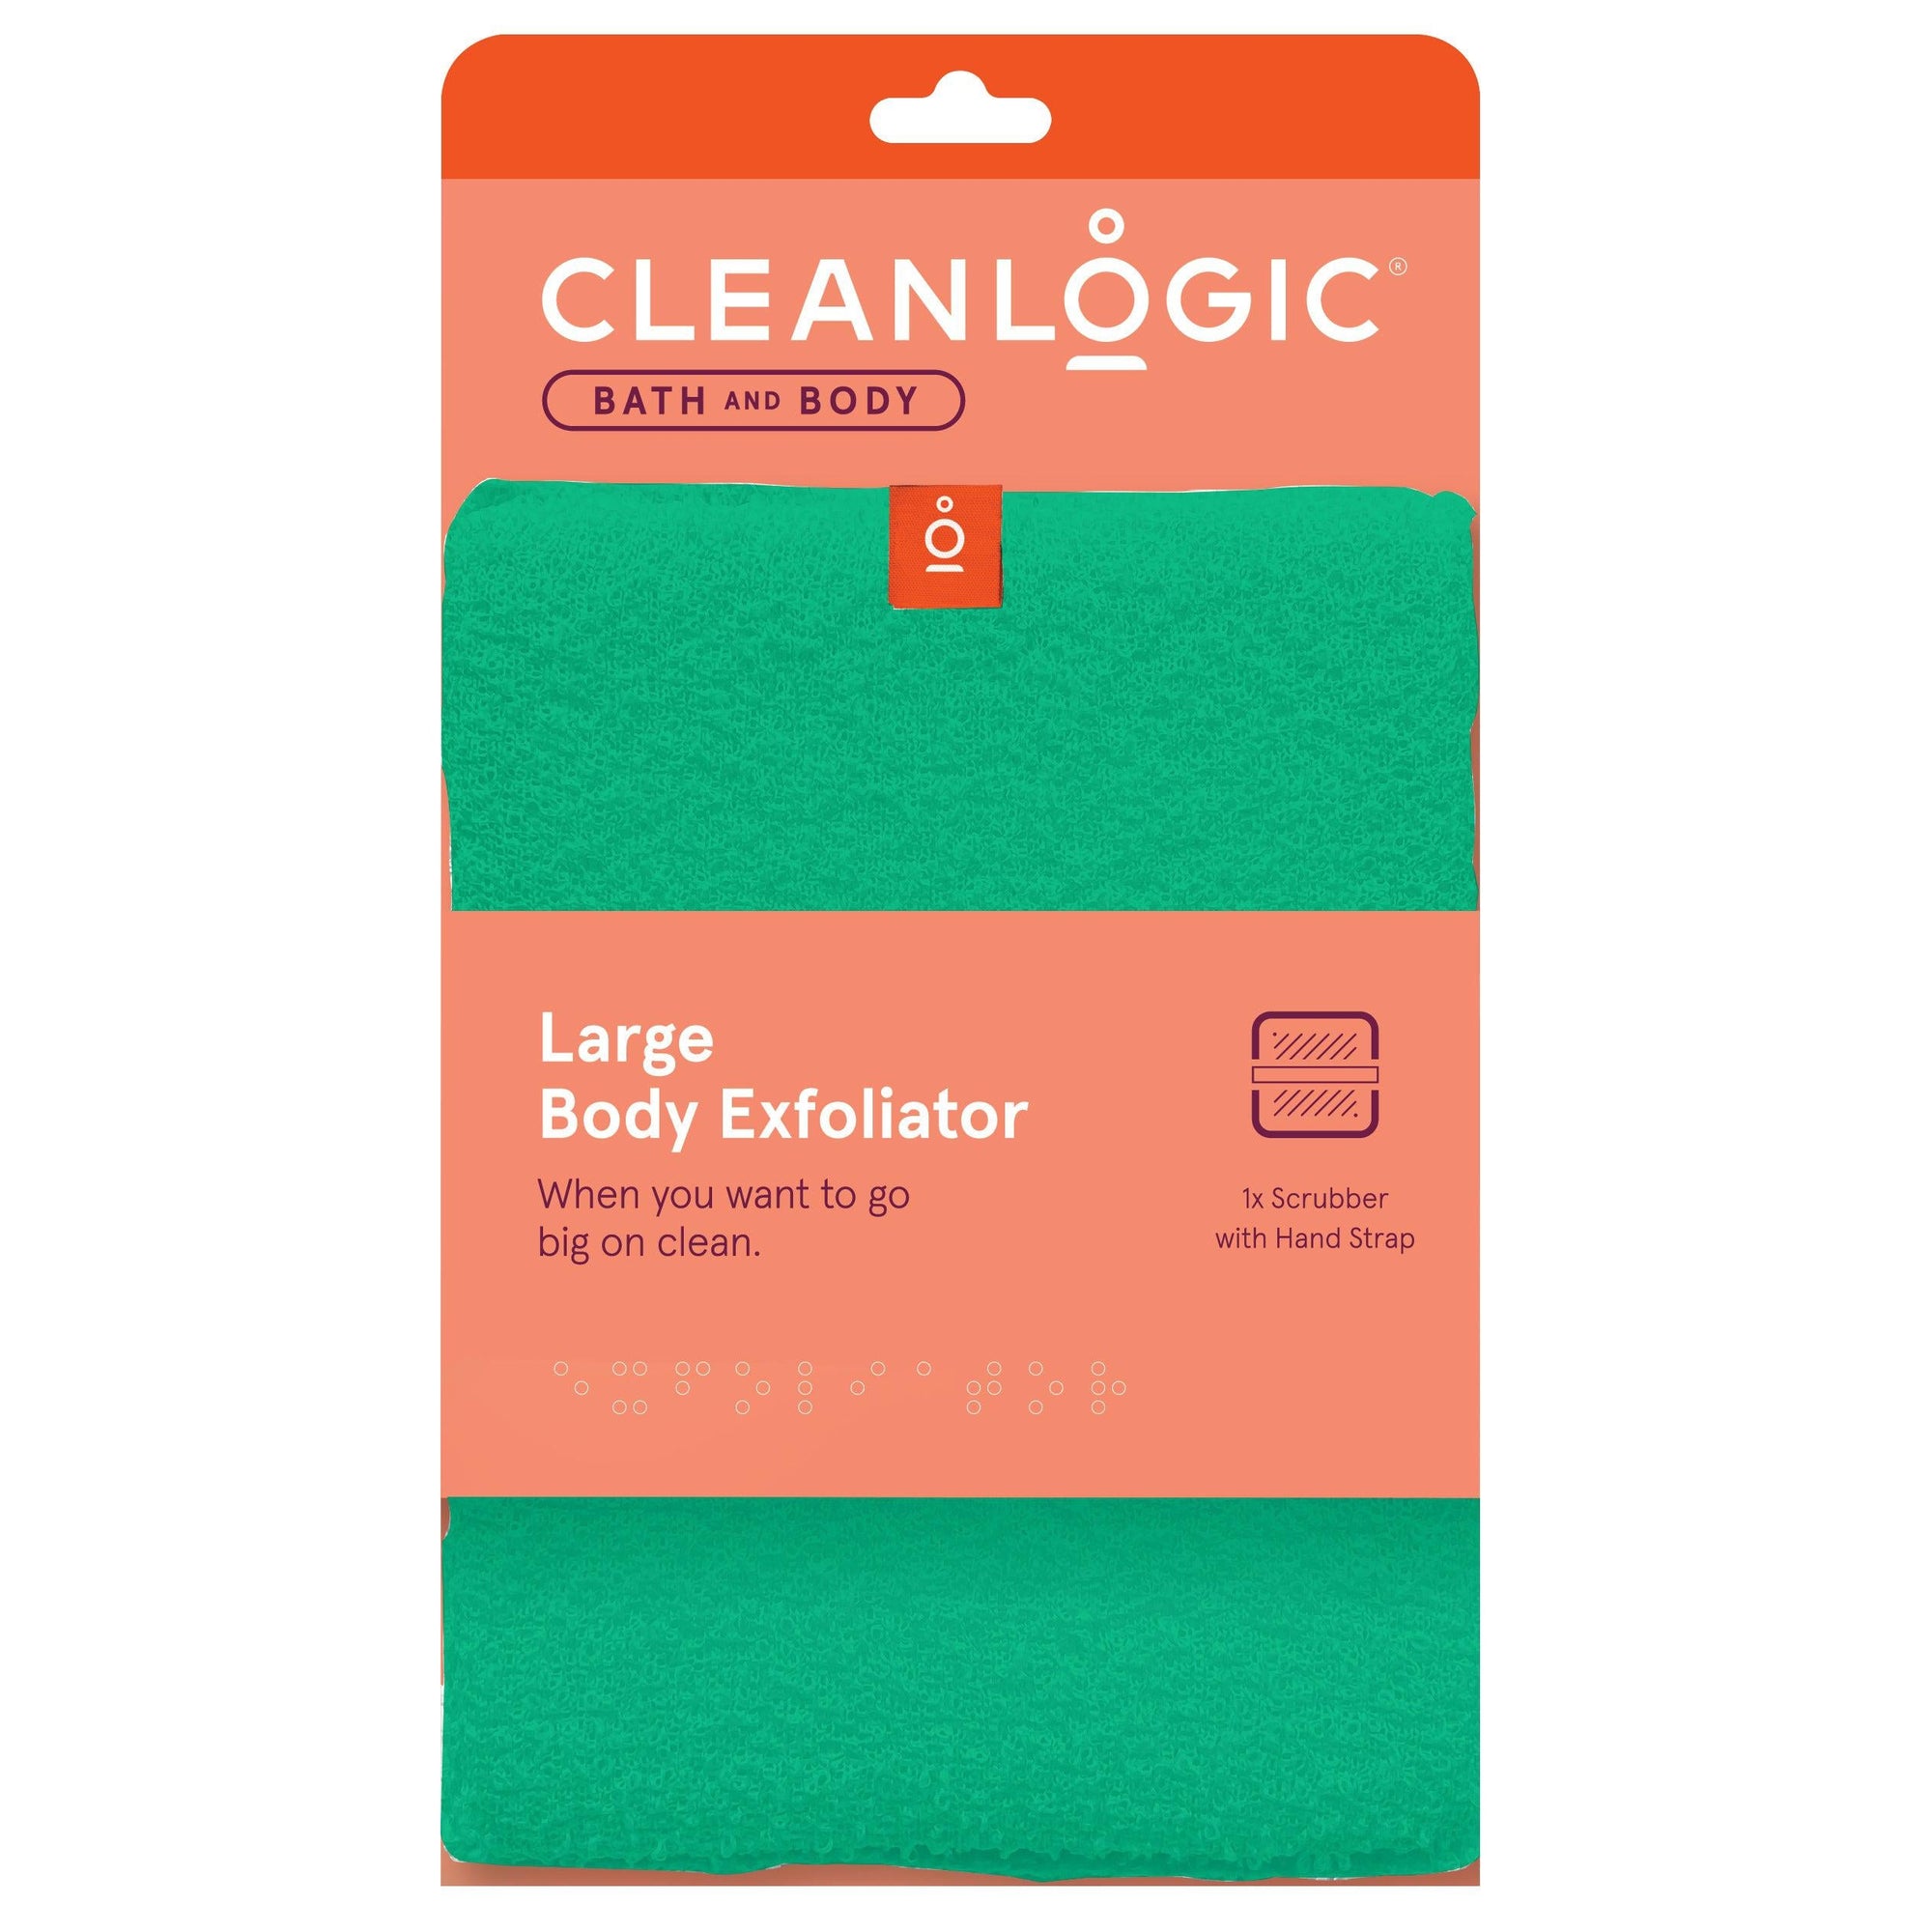 Cleanlogic Large Body Exfoliator